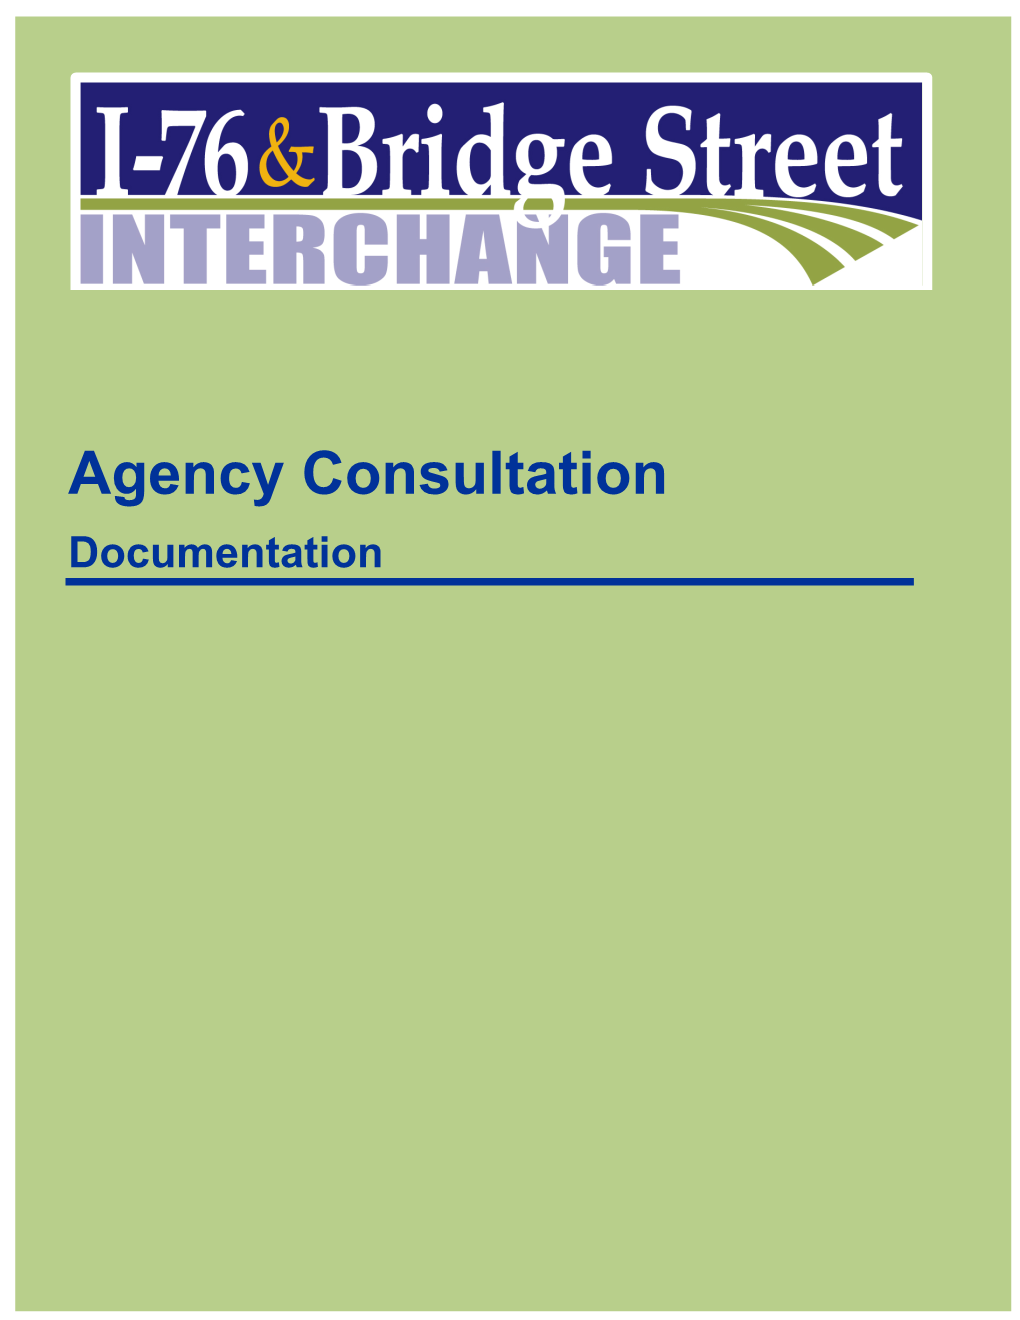 Agency Consultation Documentation